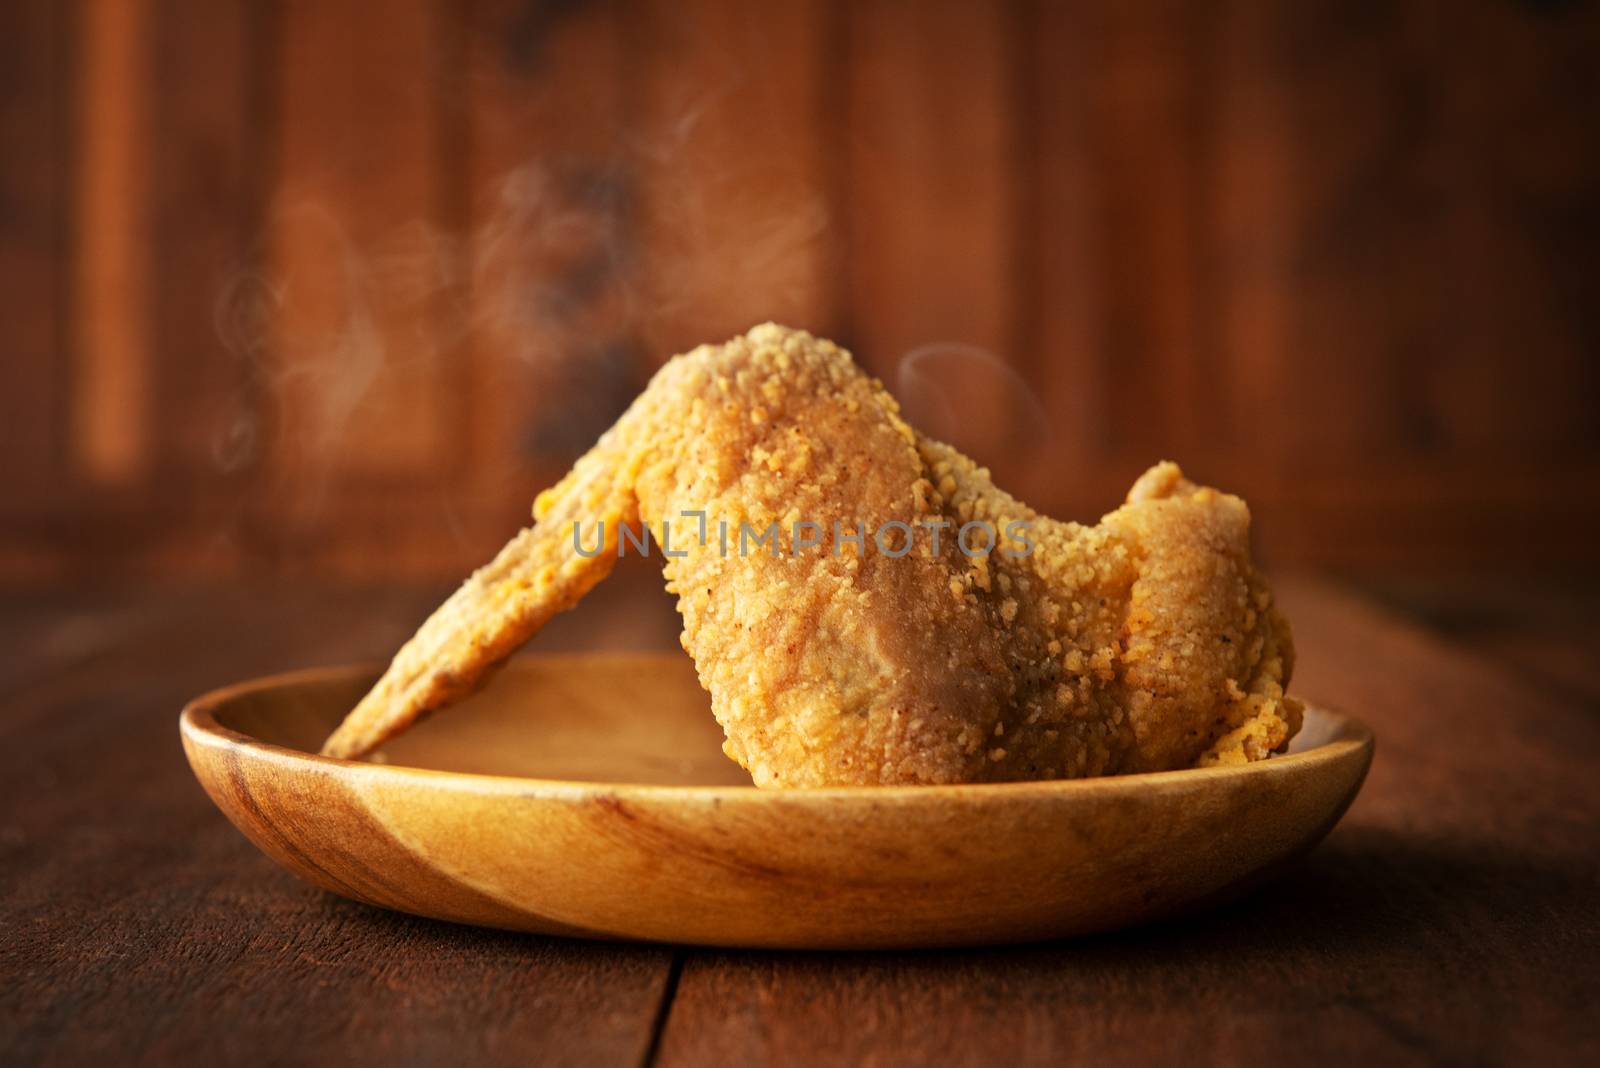 Plate of original recipe fried chicken wing, on dark wooden background.